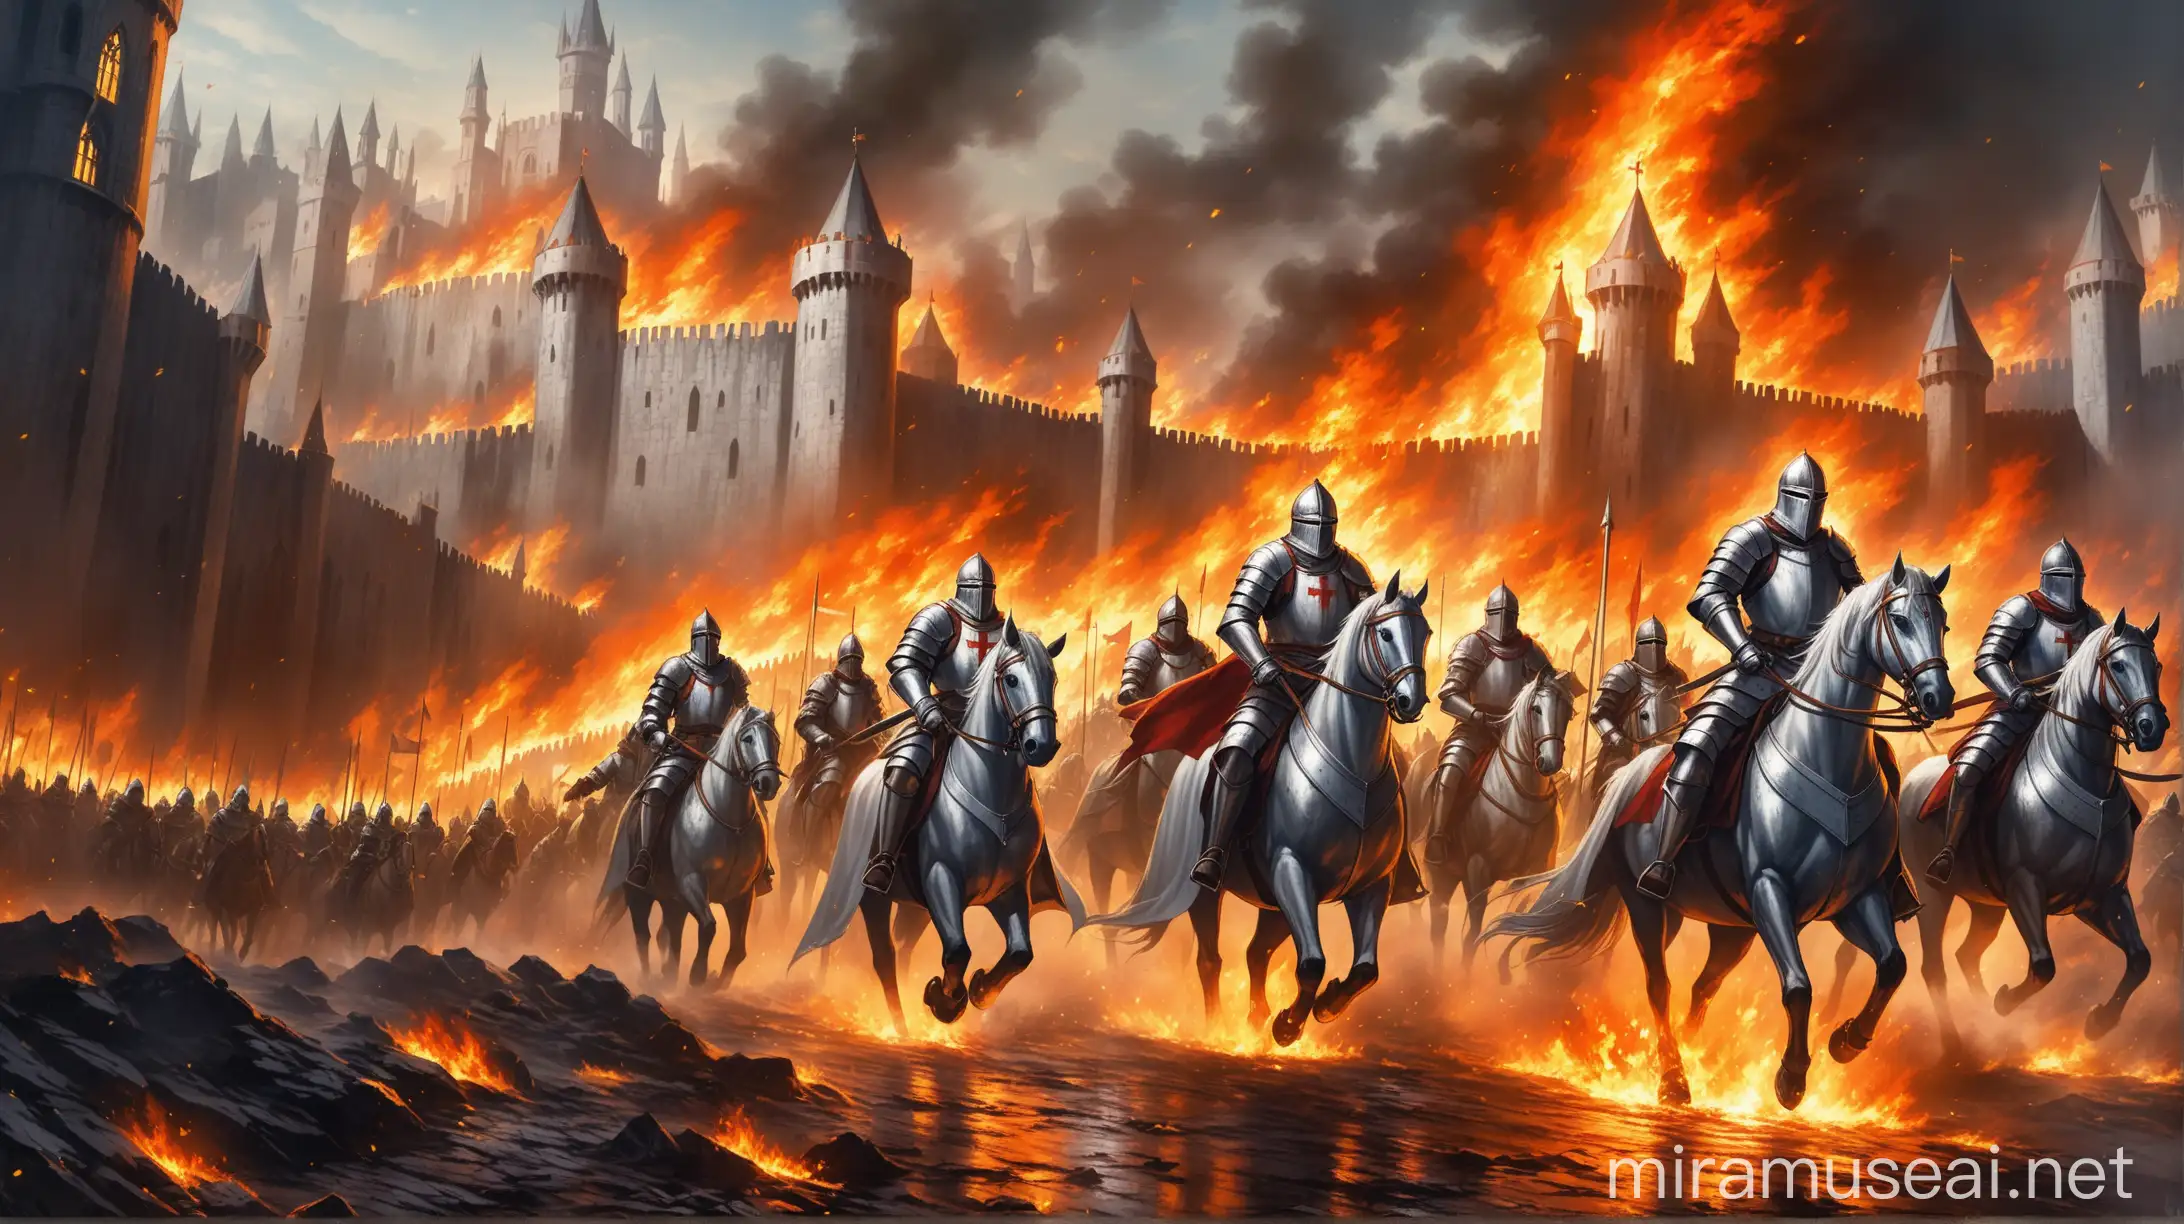 Medieval Crusaders Riding Through a Burning City